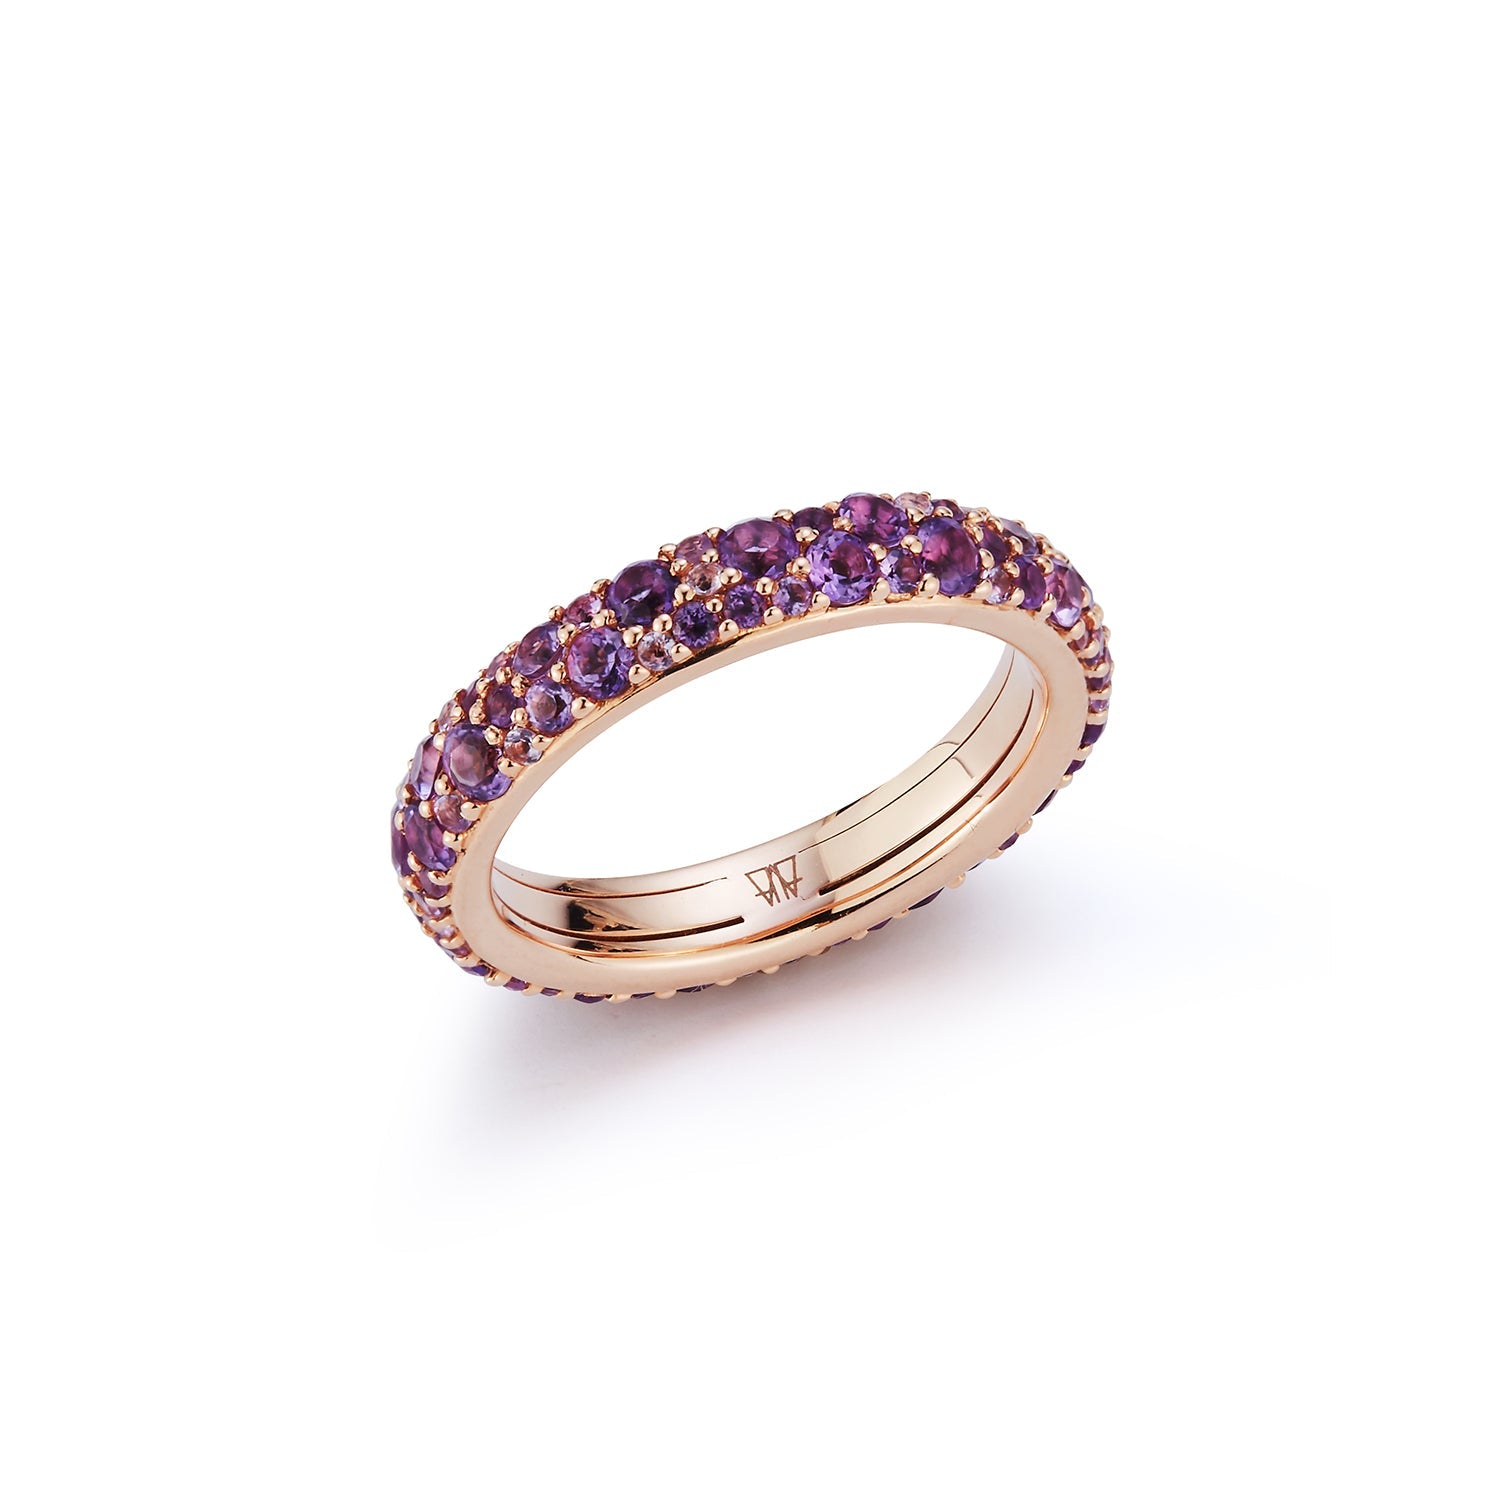 Gemstone or Champagne Diamond Eternity Band Ring